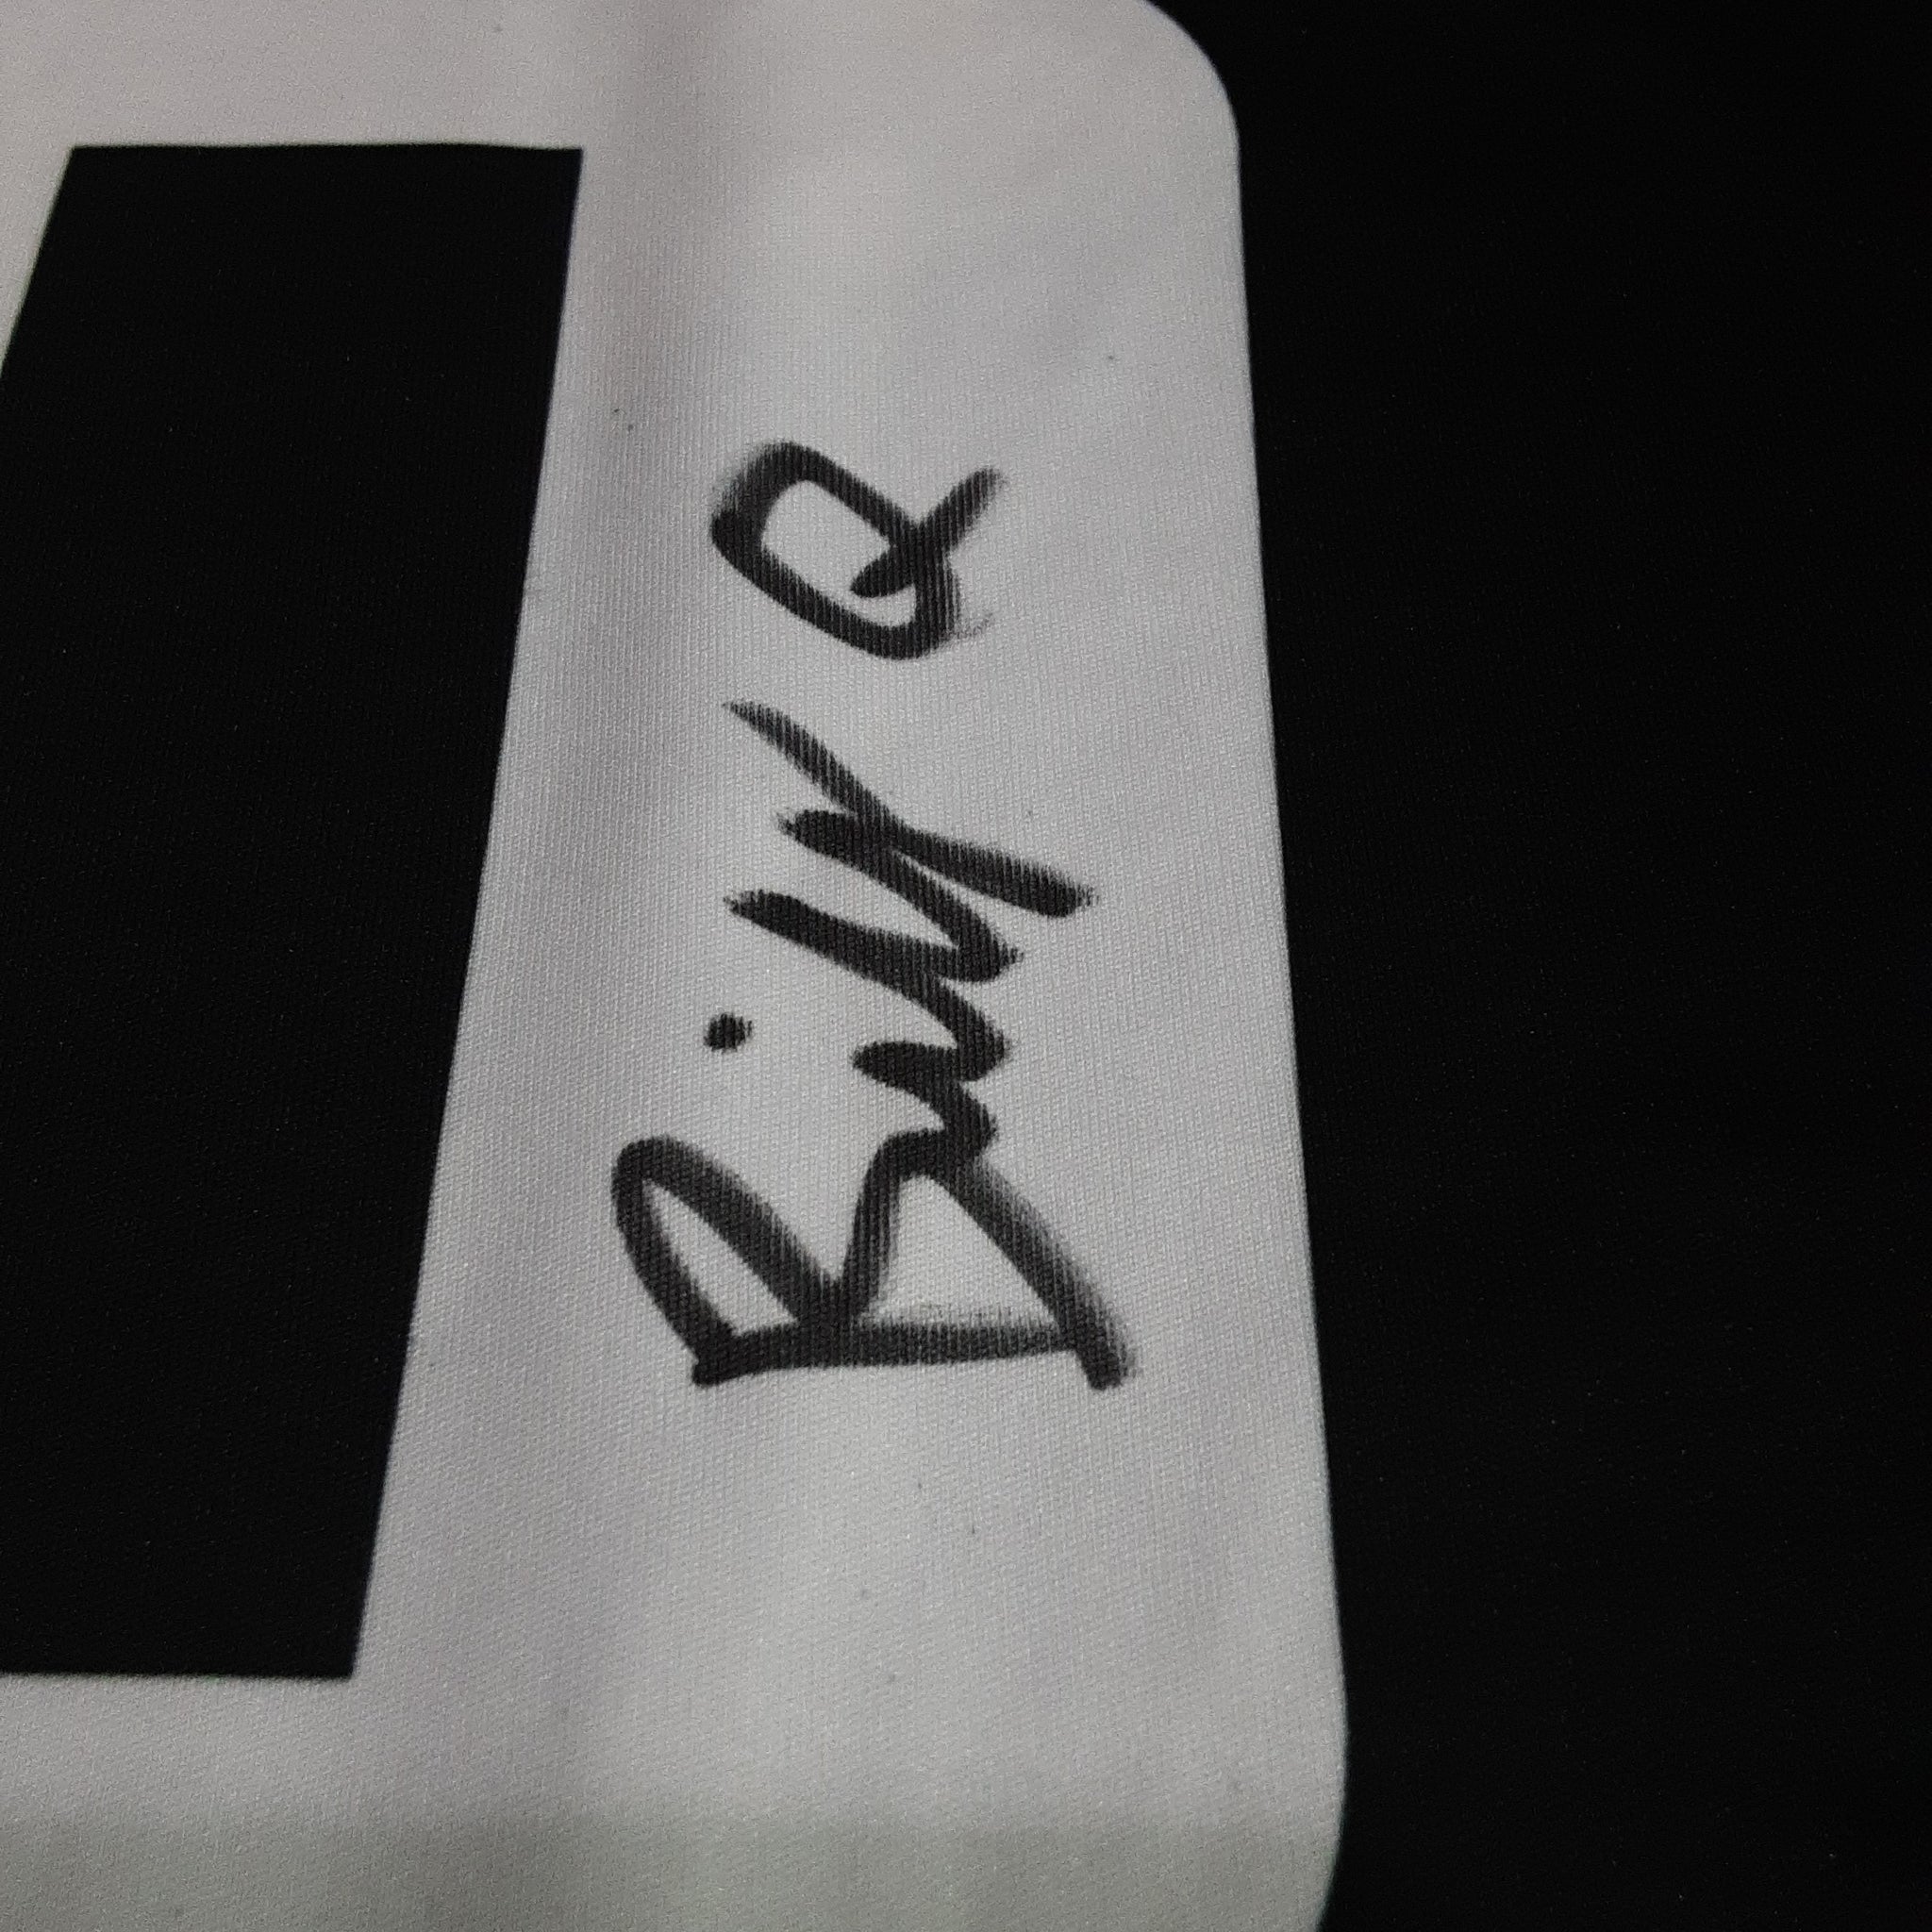 Billy Quarantillo Authentic Signed Shirt Autographed JSA